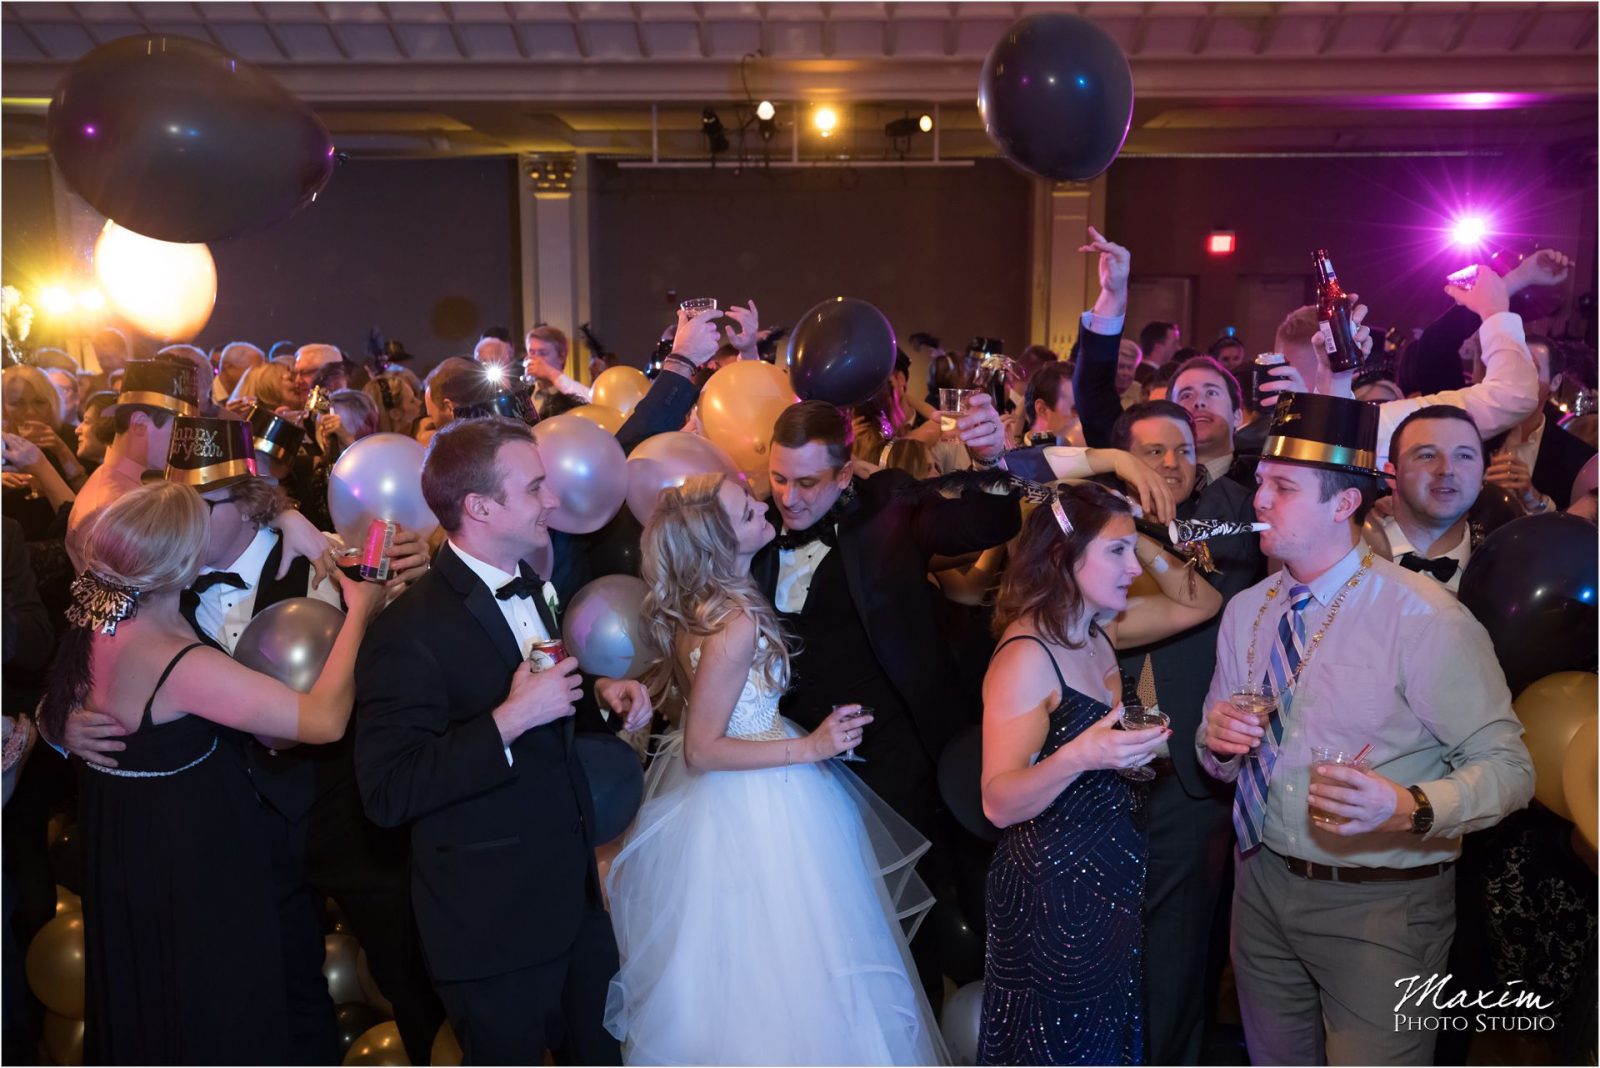 Cincinnati Music Hall Ballroom Wedding Reception Dance Balloon drop